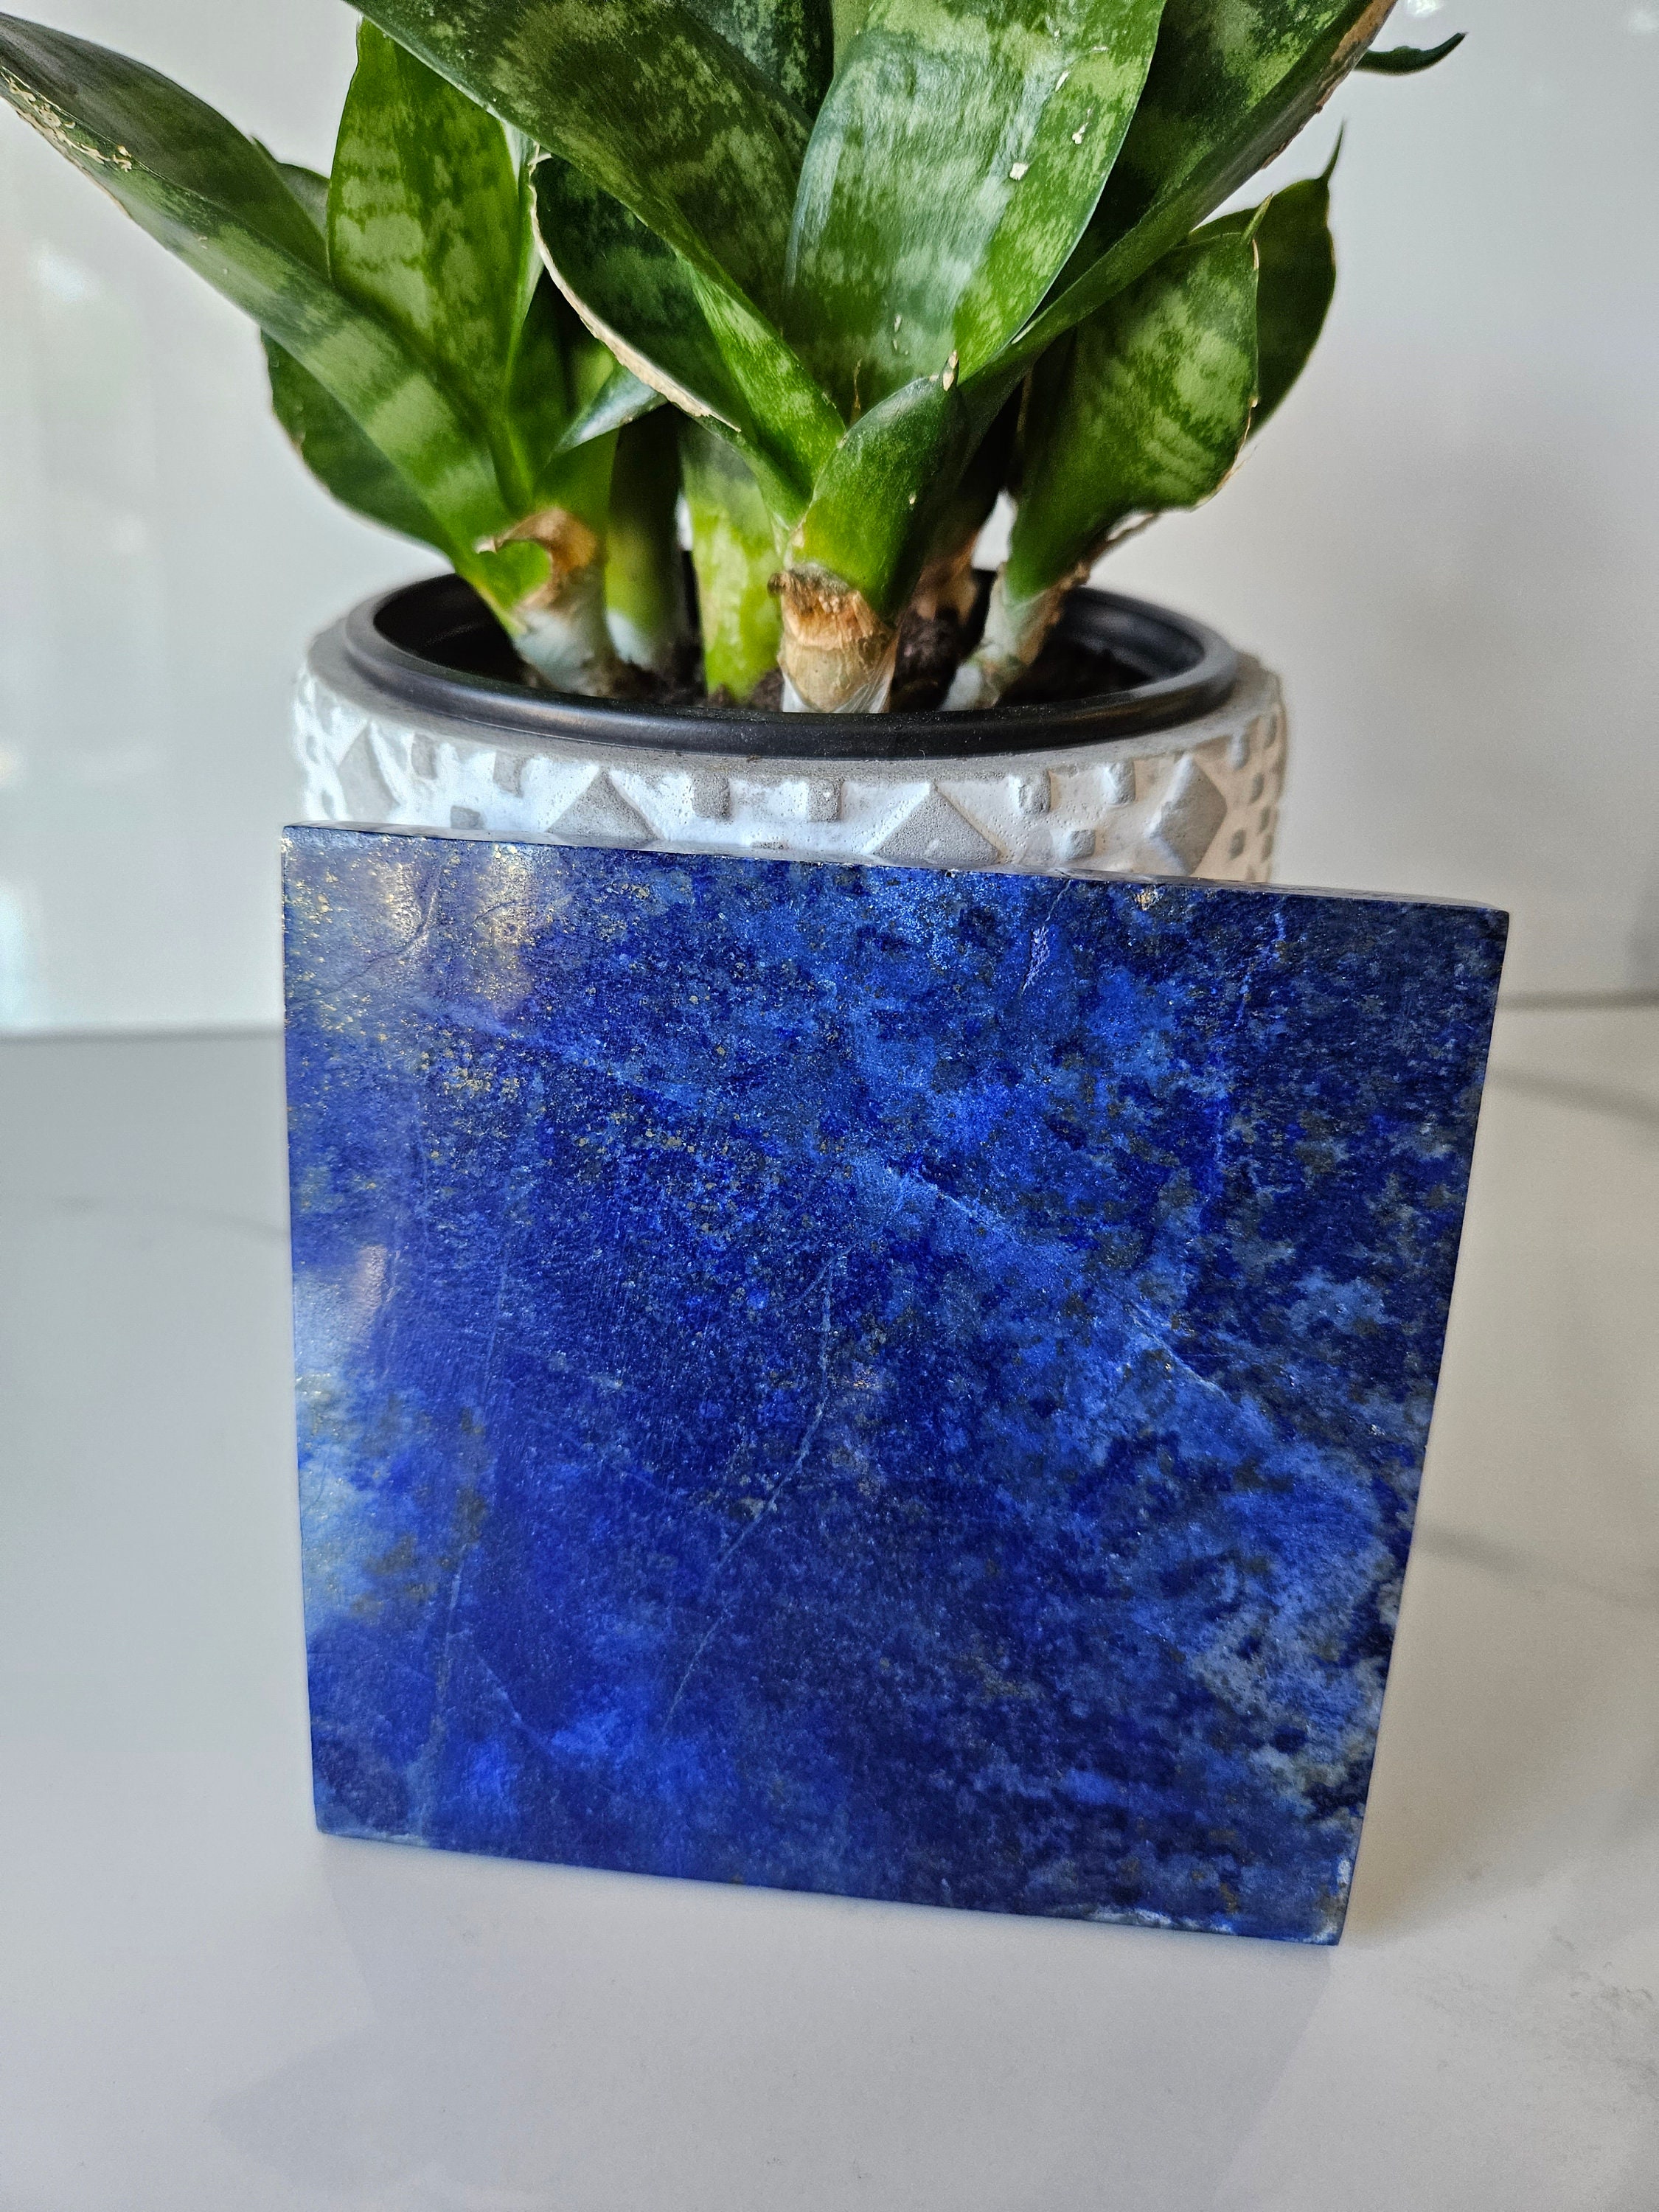 Quality 10 x 10 cm Polished Stone Sided Tile | willpower, Blue Aventurine, royal blue, jewlery, birthday gift, Birthstone, Stone Slice, Heal